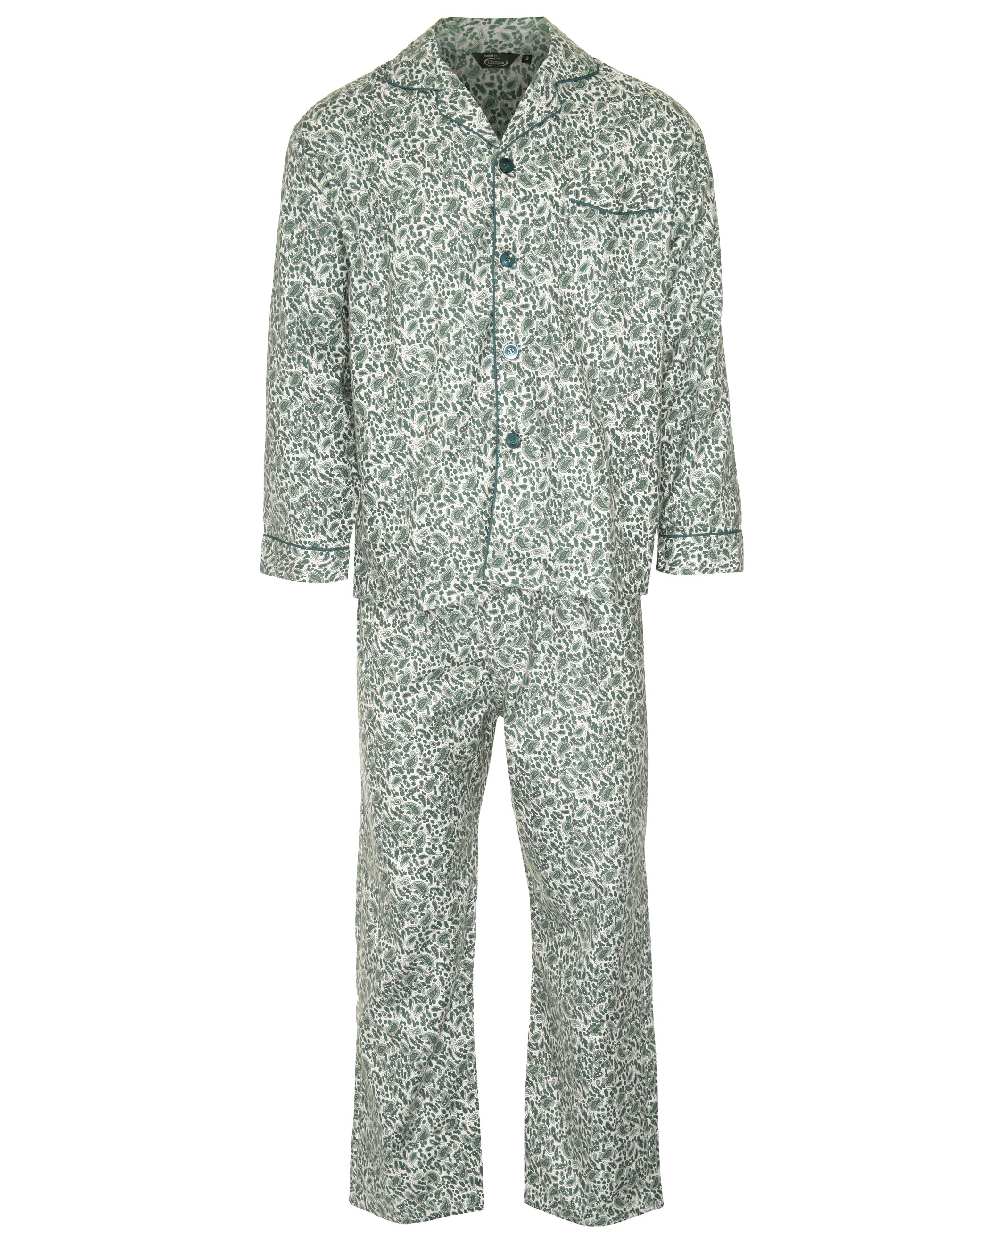 Champion Paisley Pyjamas 100% Cotton in Green 